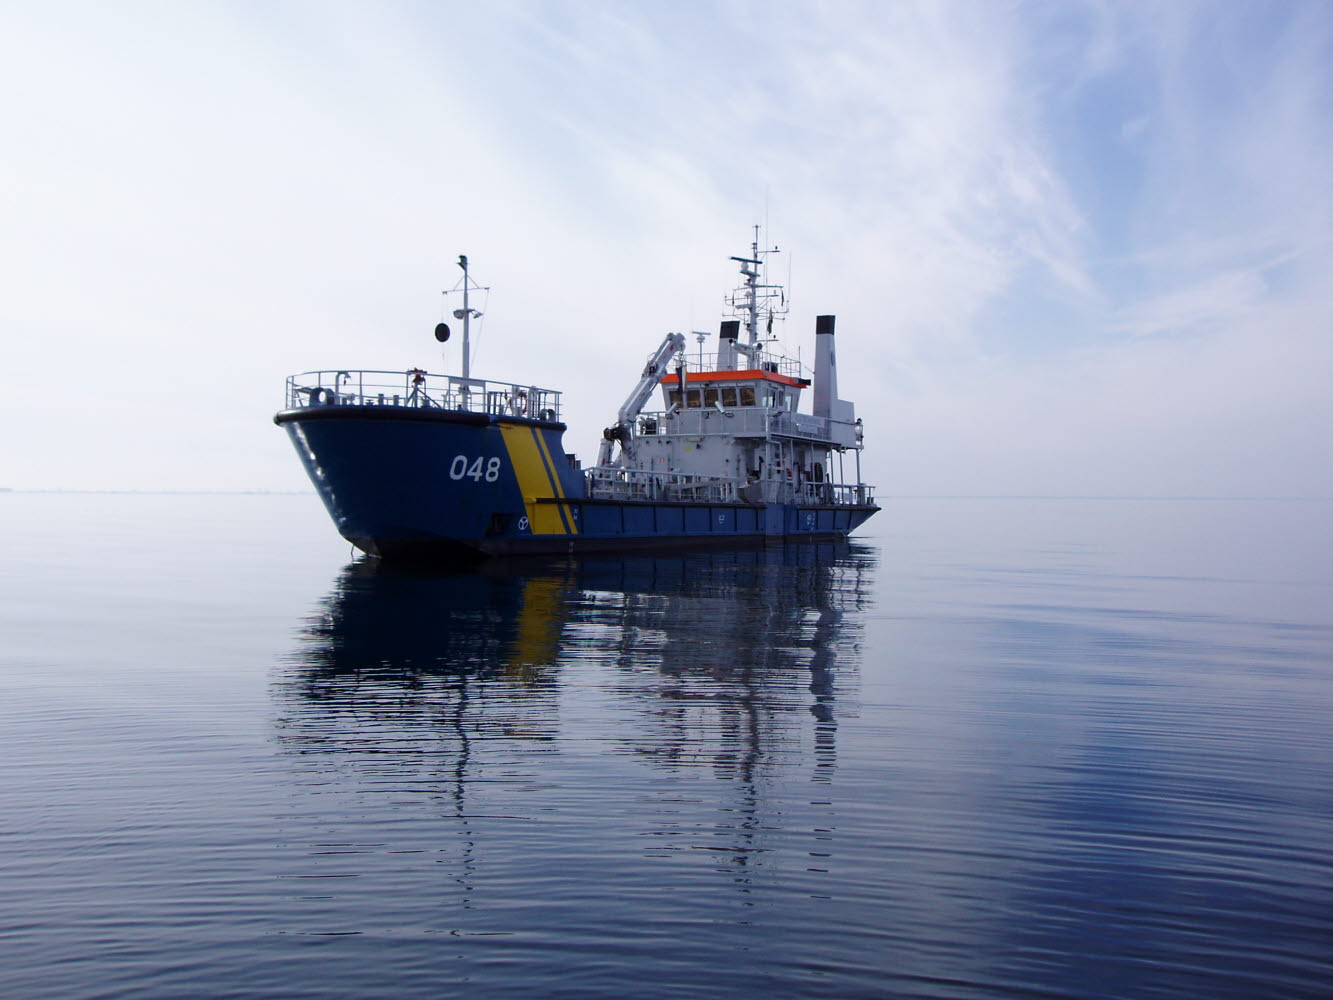 Environmental protection vessel KBV 048